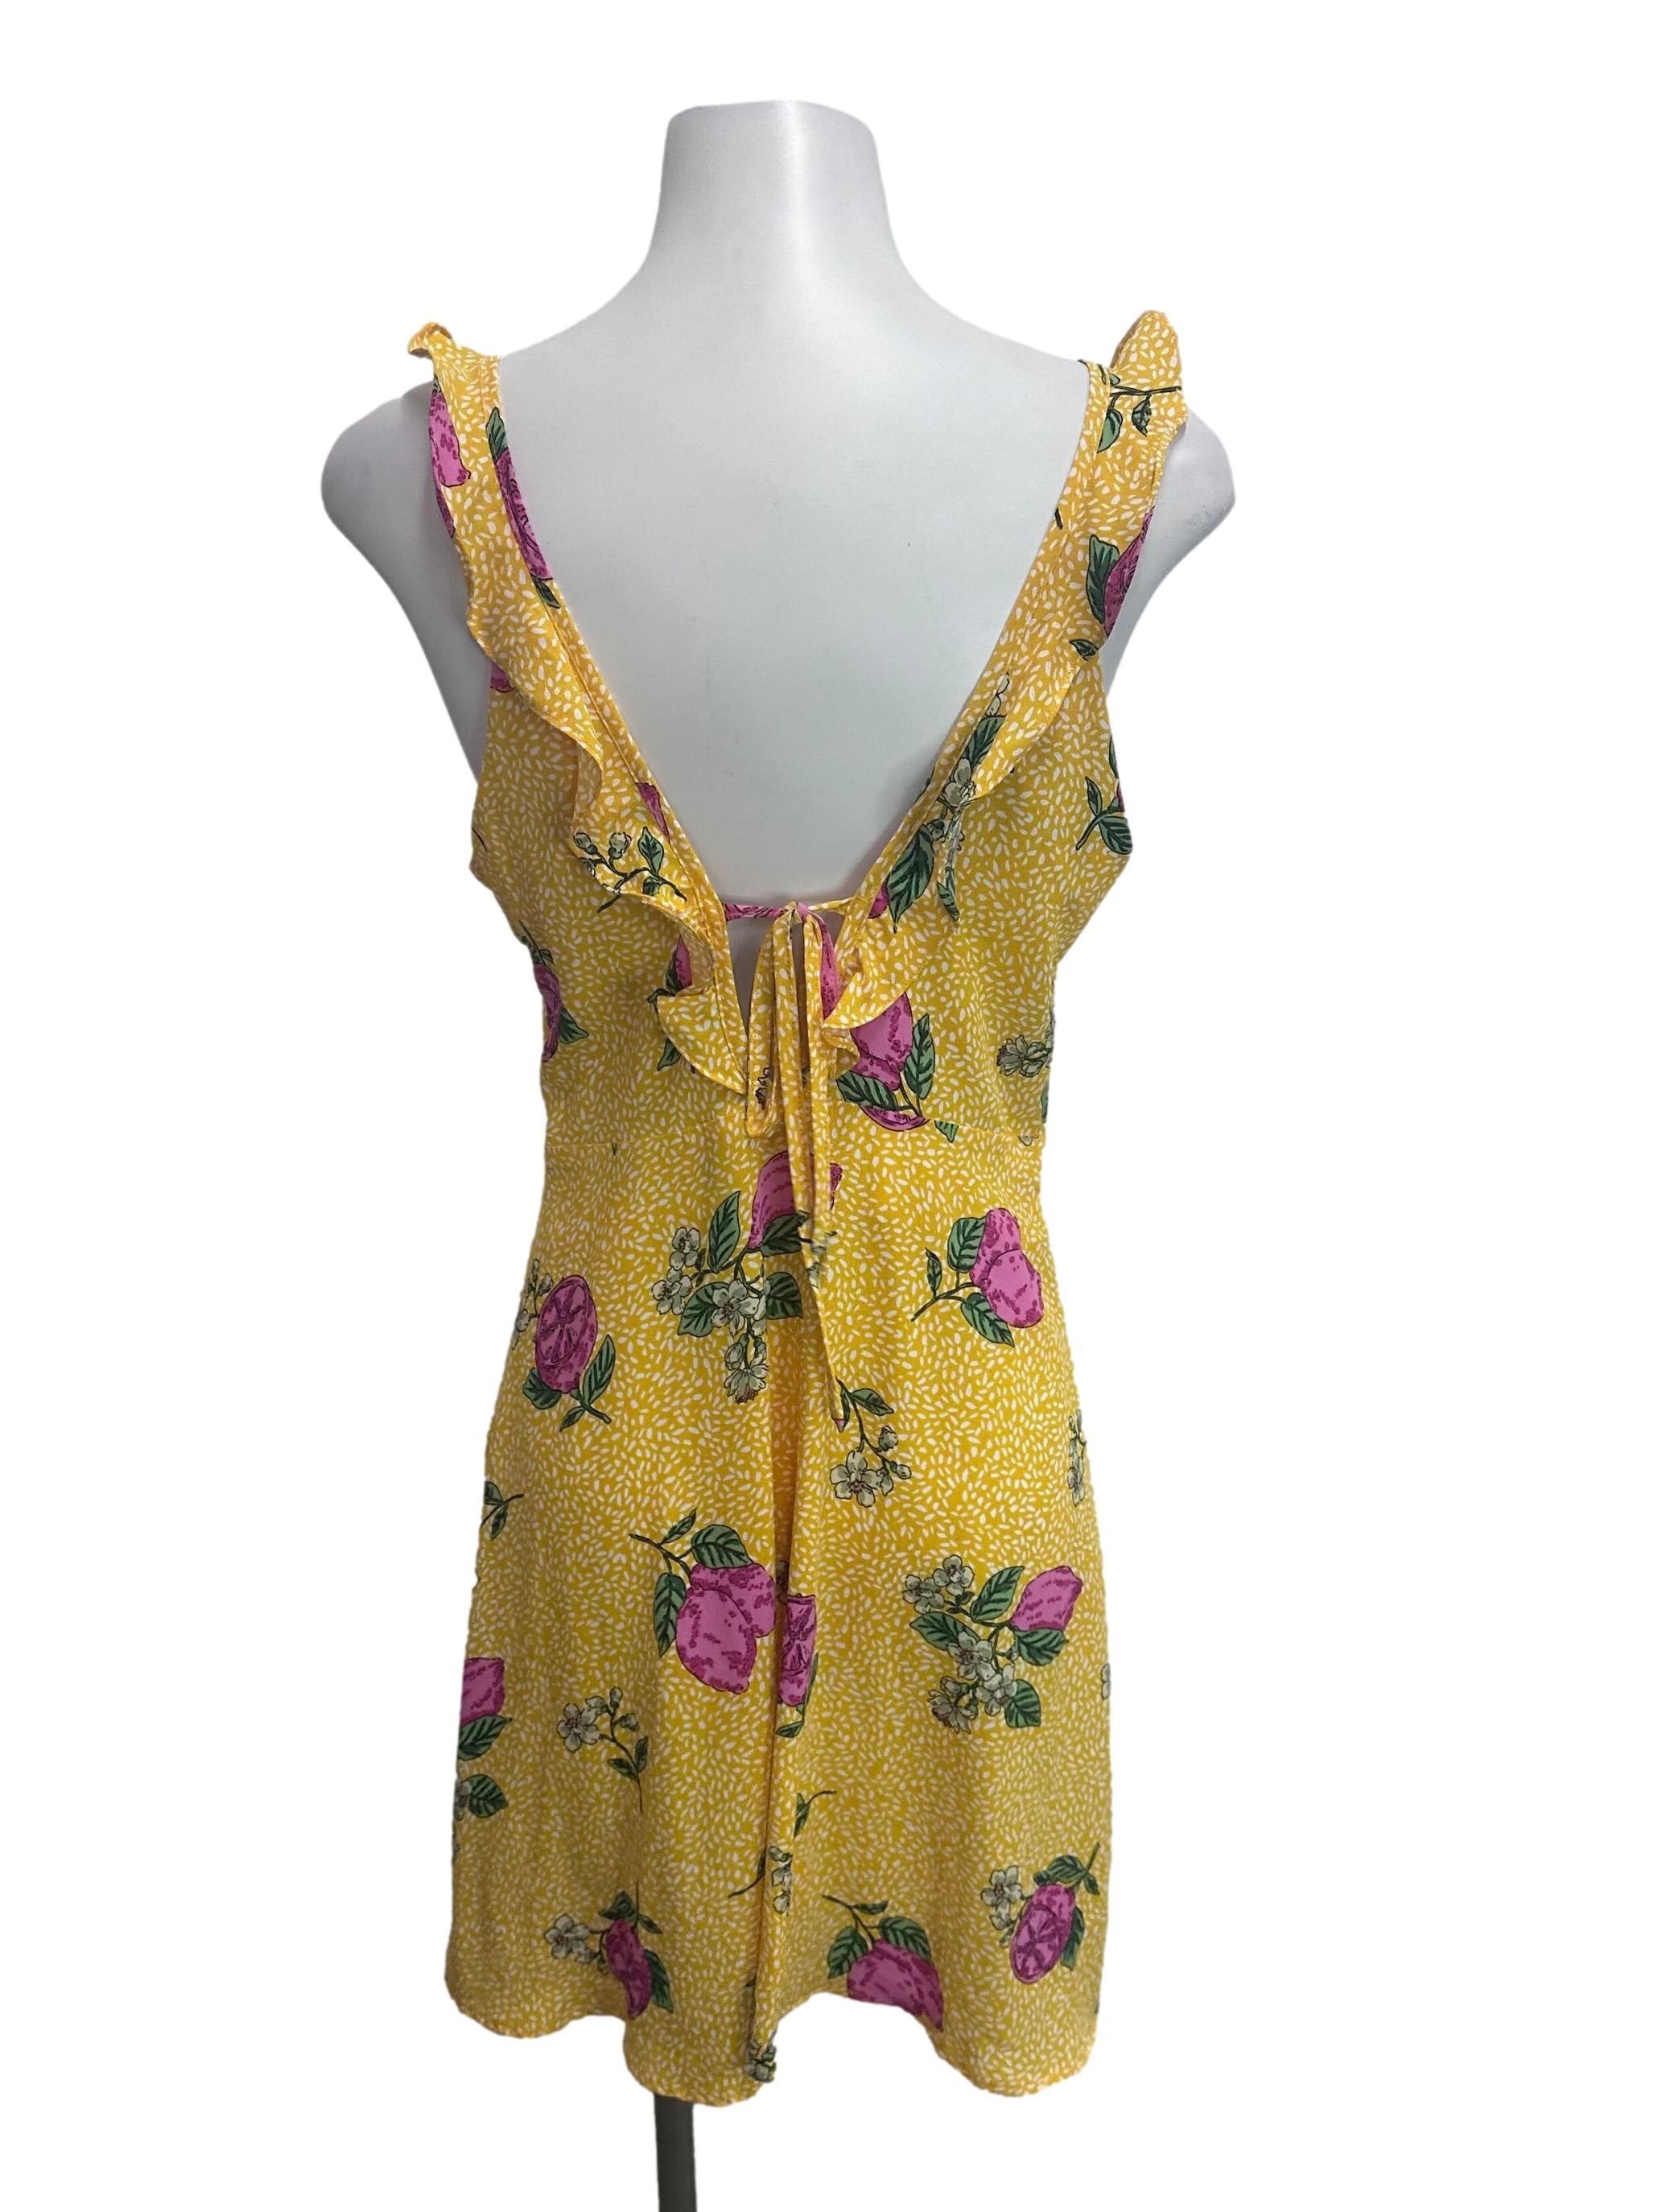 Yellow Floral Mini Dress